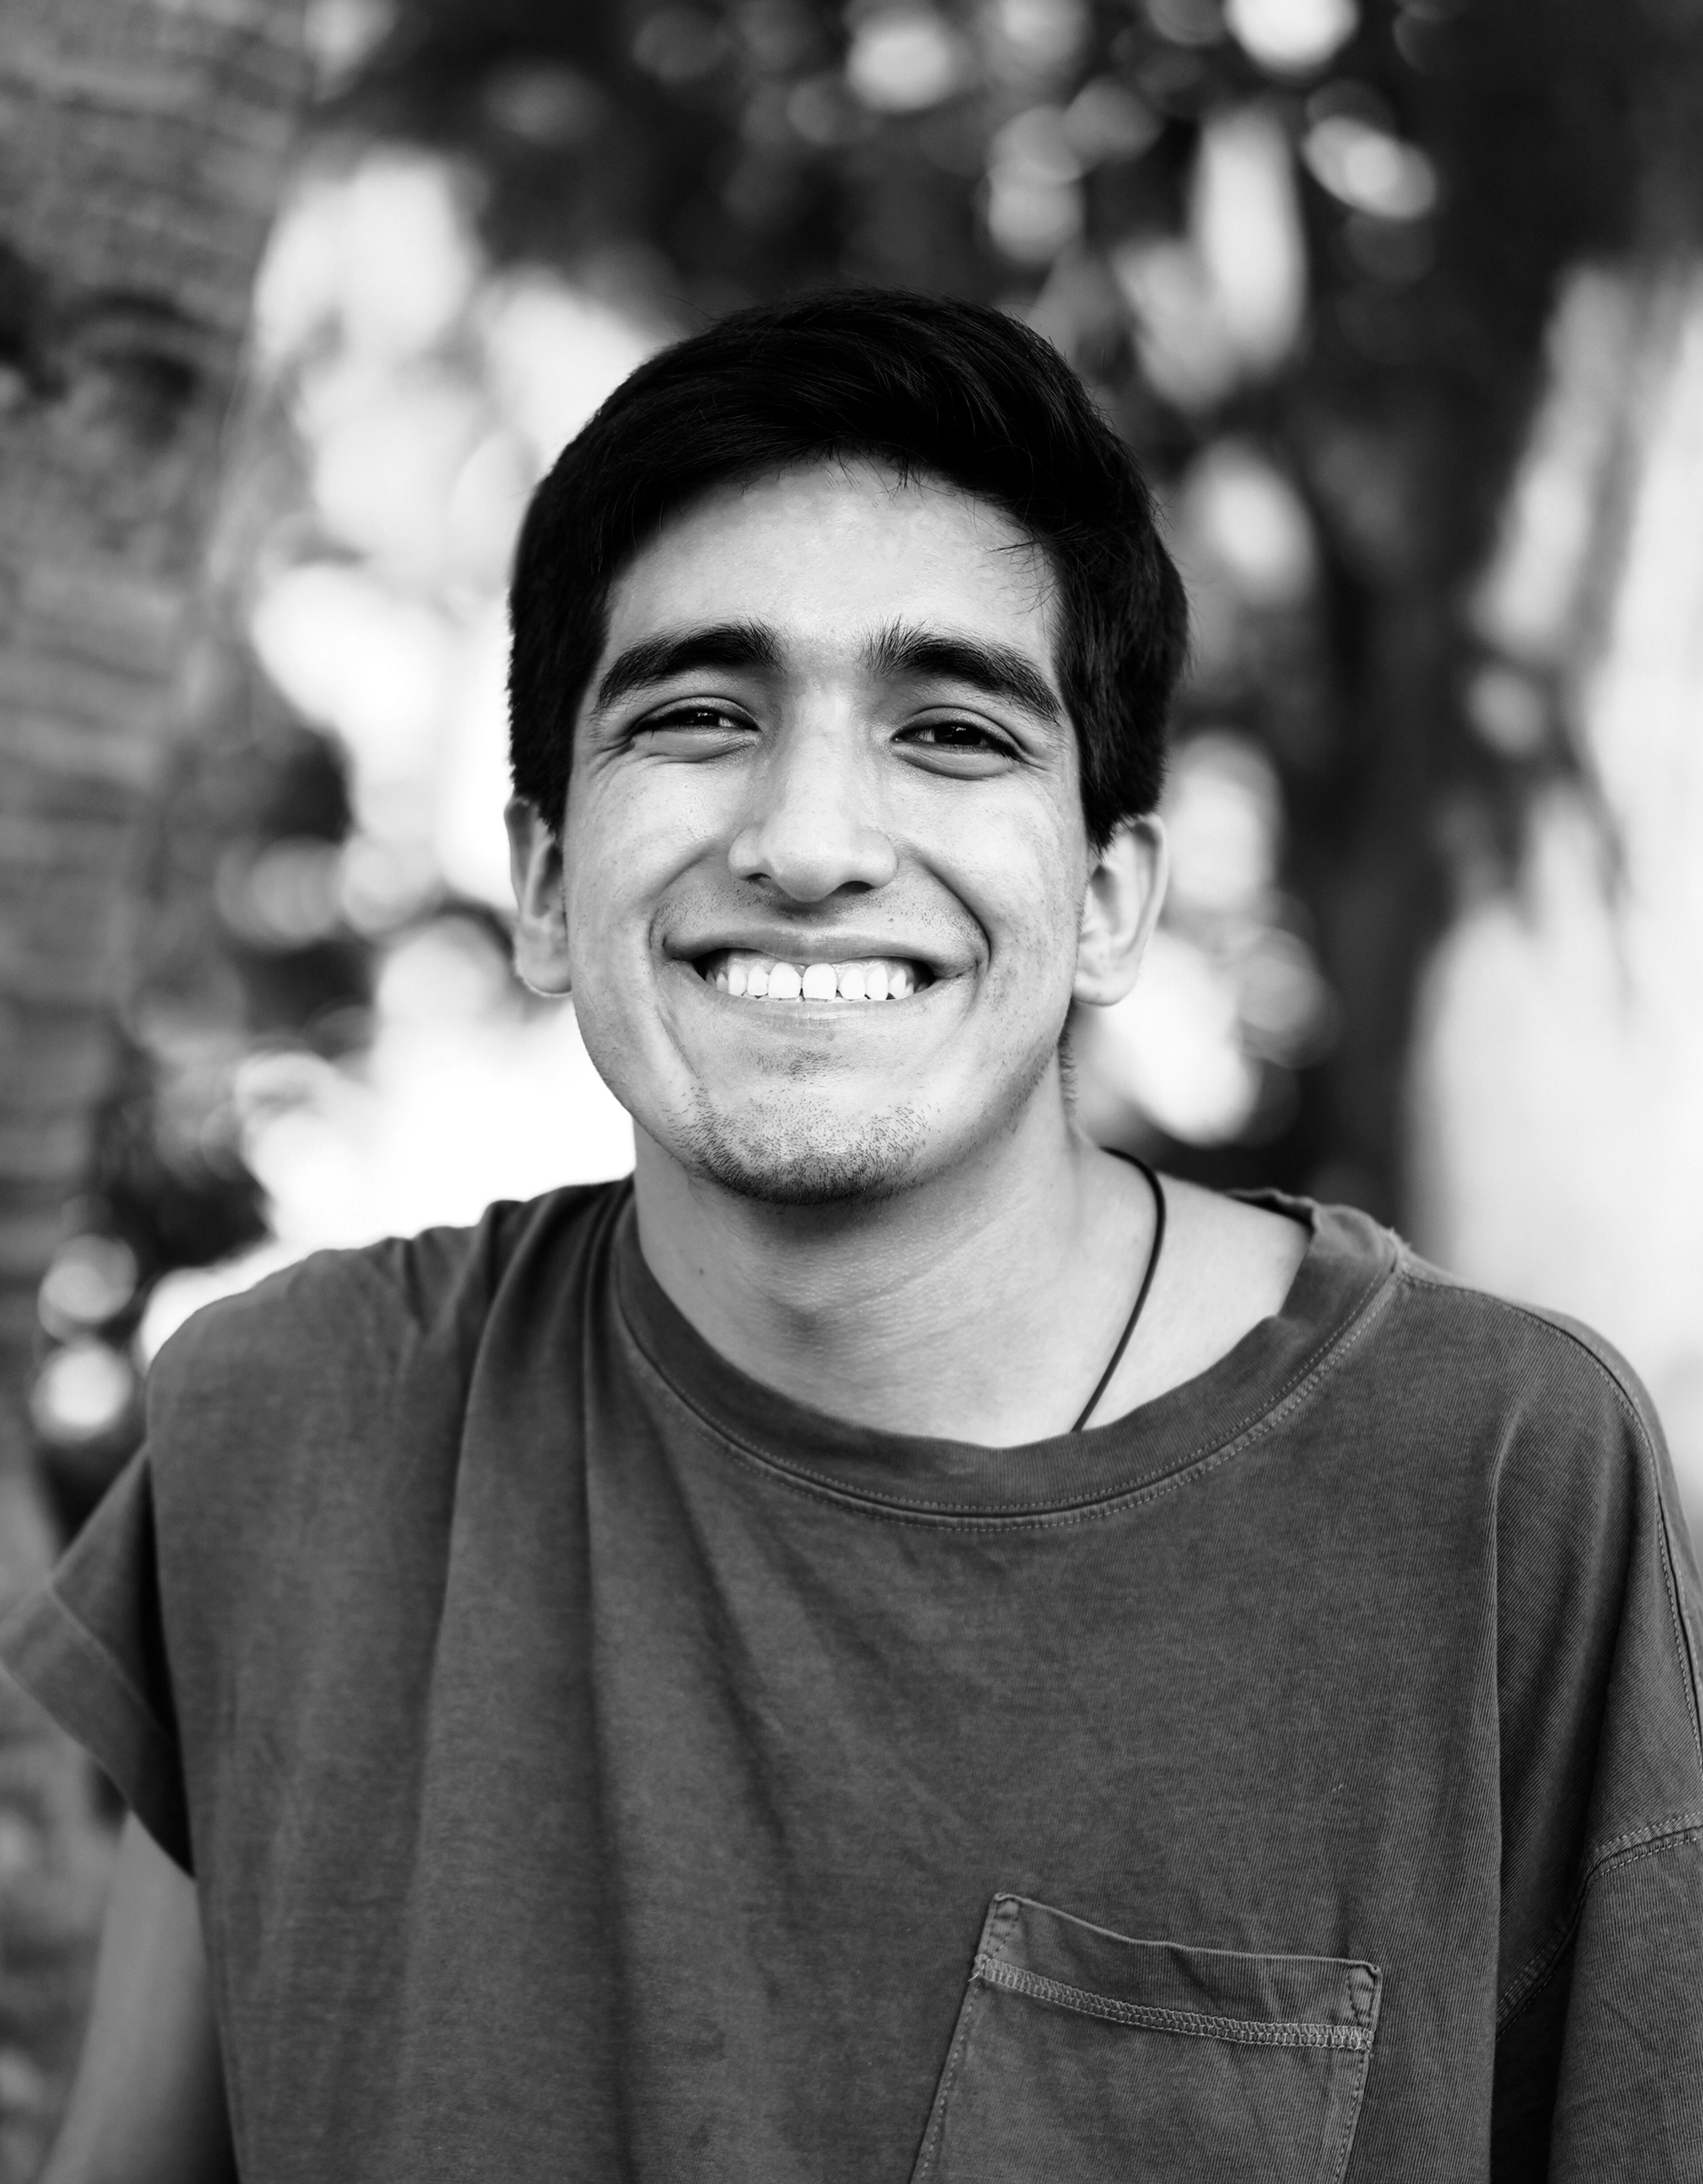 Un joven adulto masculino sonriendo ampliamente con una camiseta informal, con un fondo natural borroso que sugiere un entorno al aire libre.